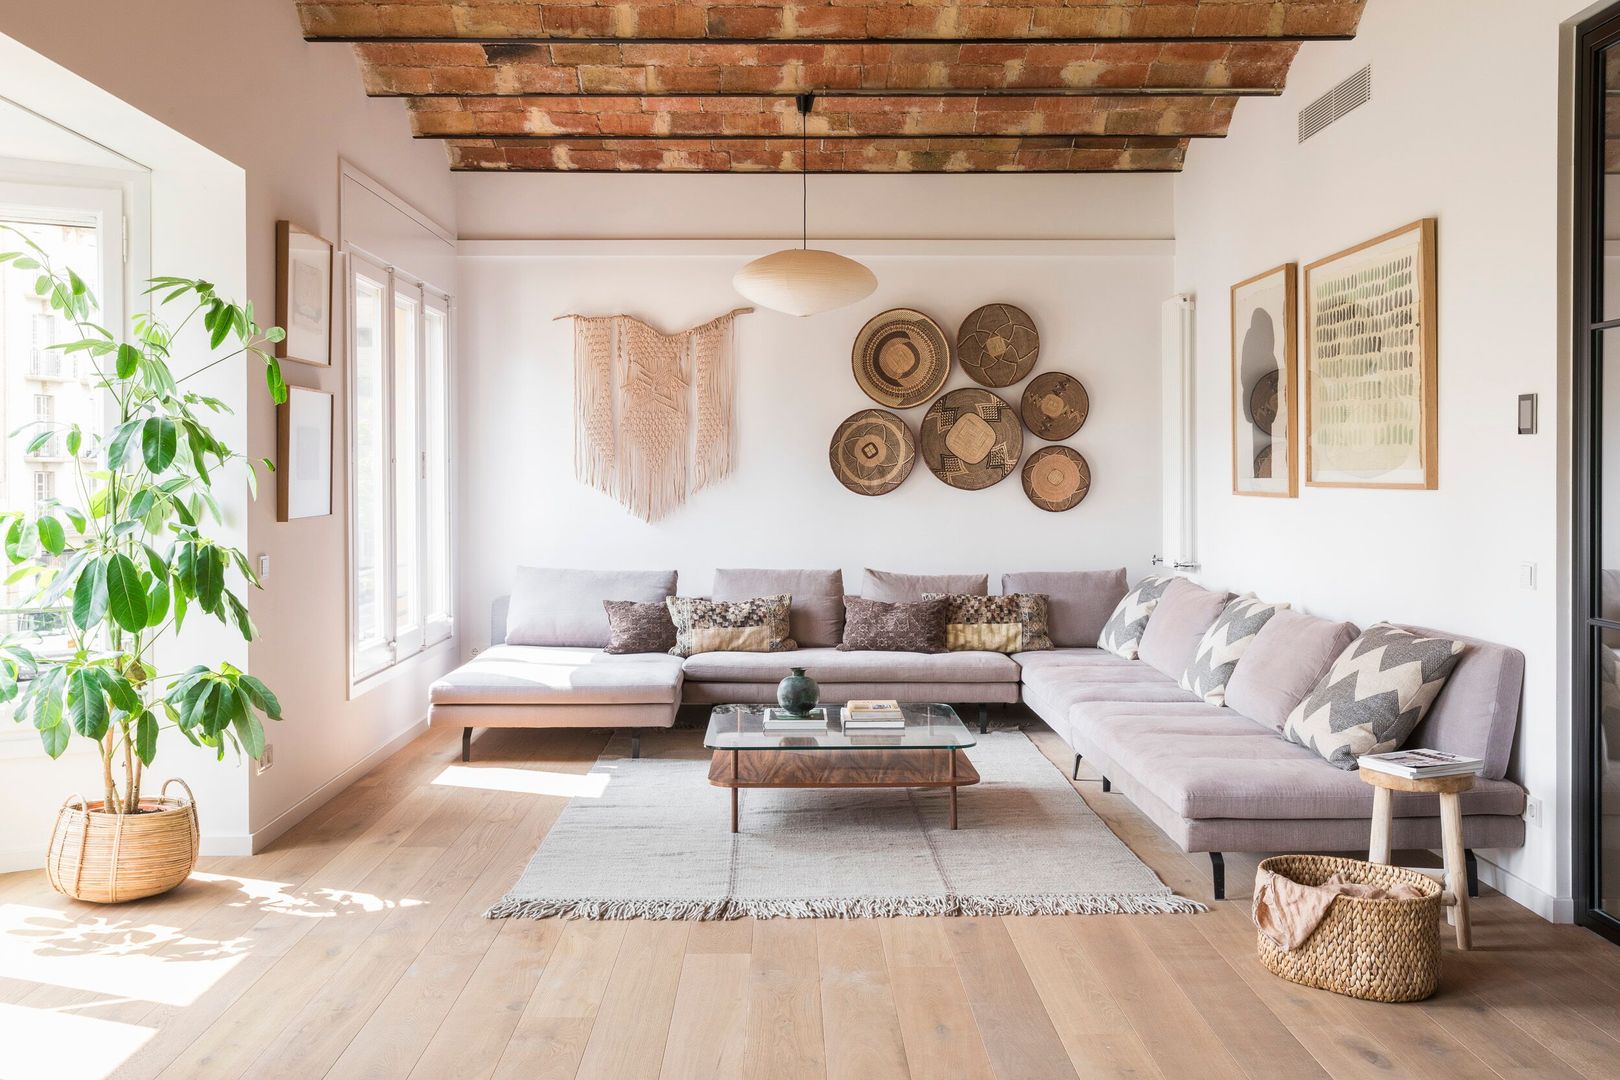 Livingroom homify Salas de estilo escandinavo